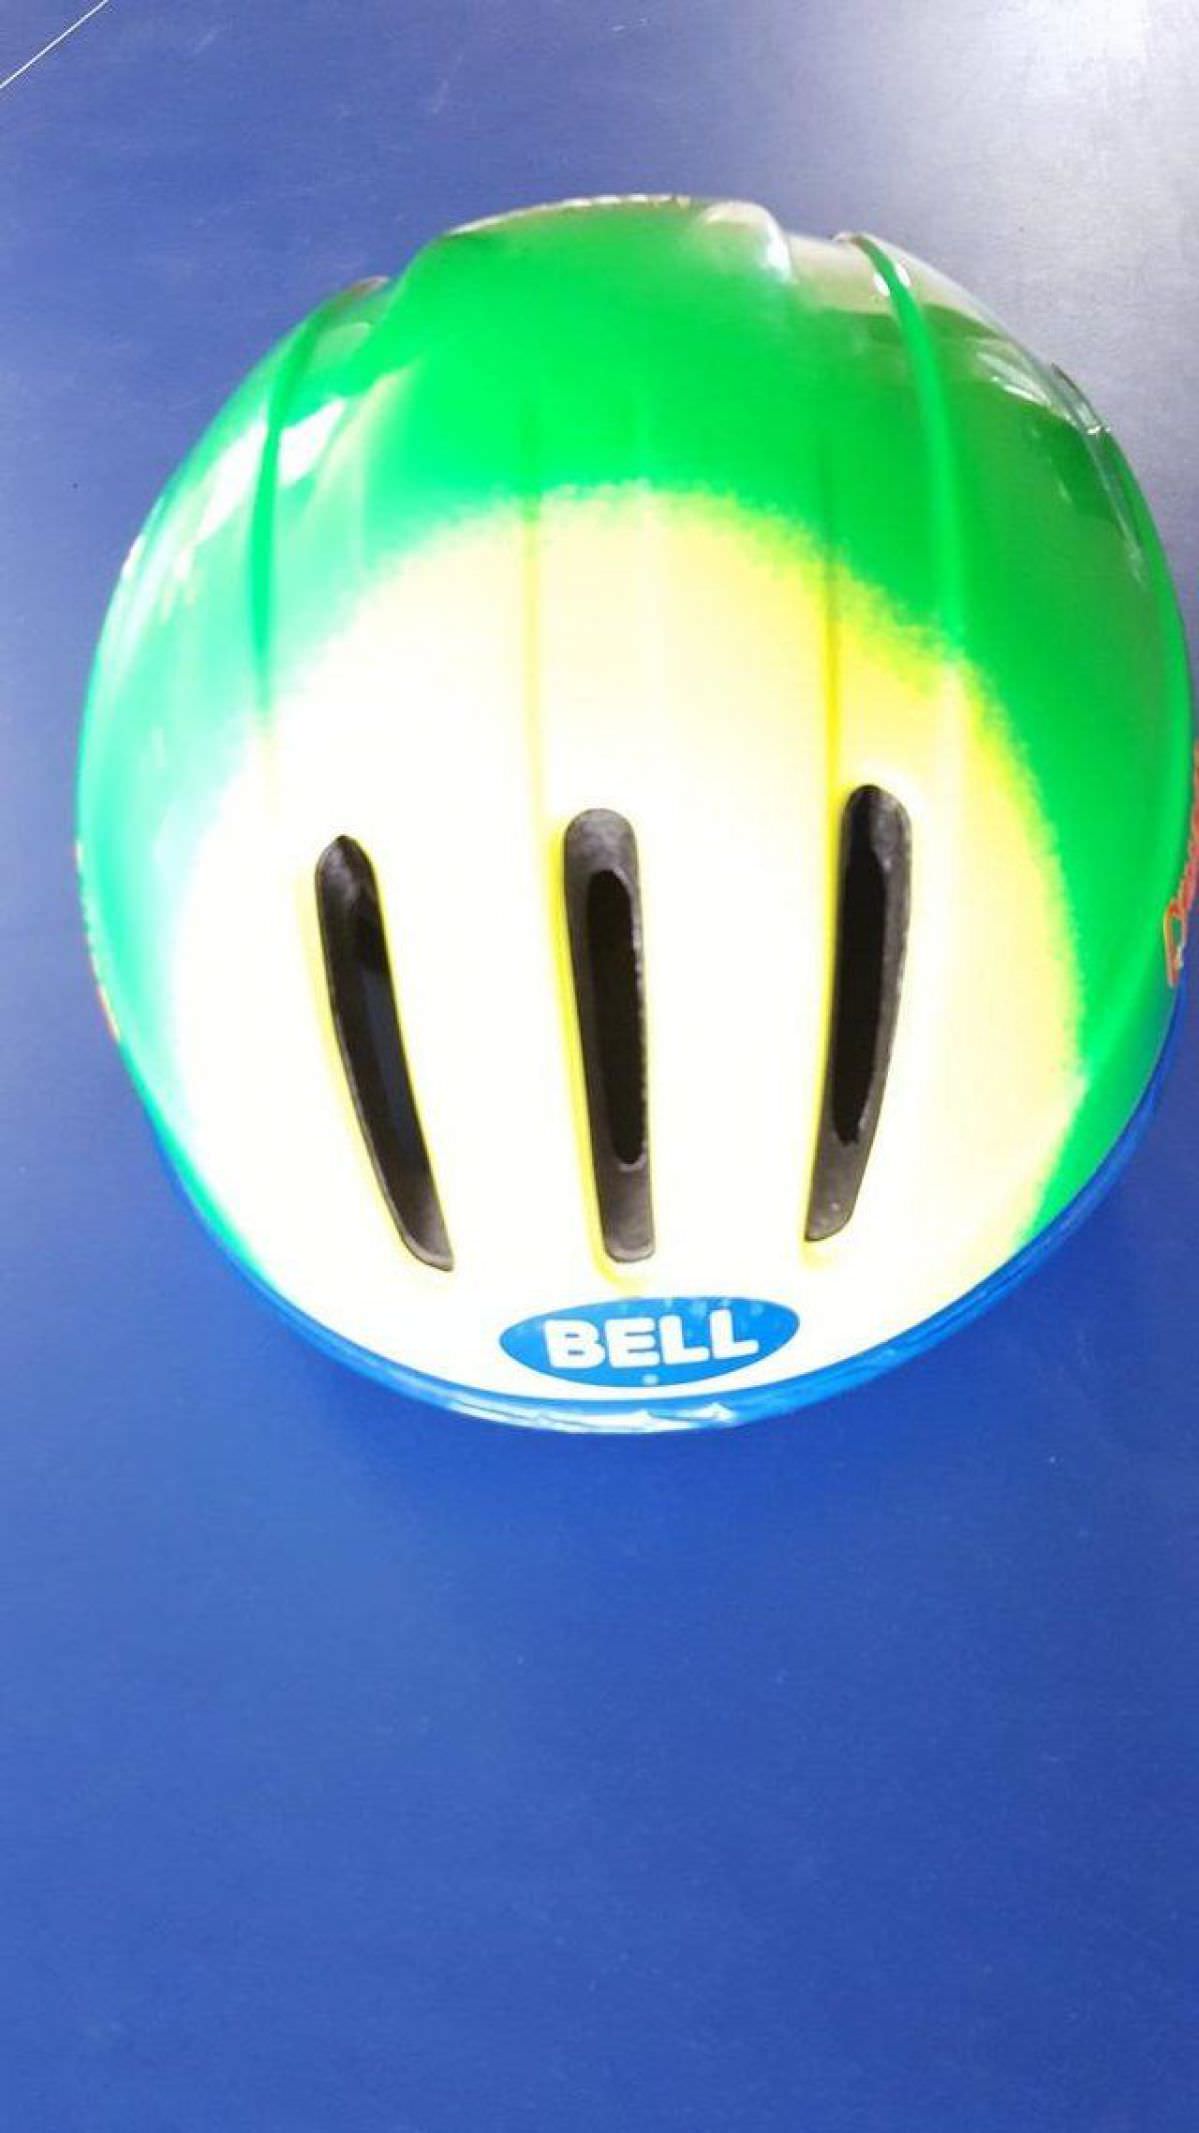 Bell Cyling Helmet